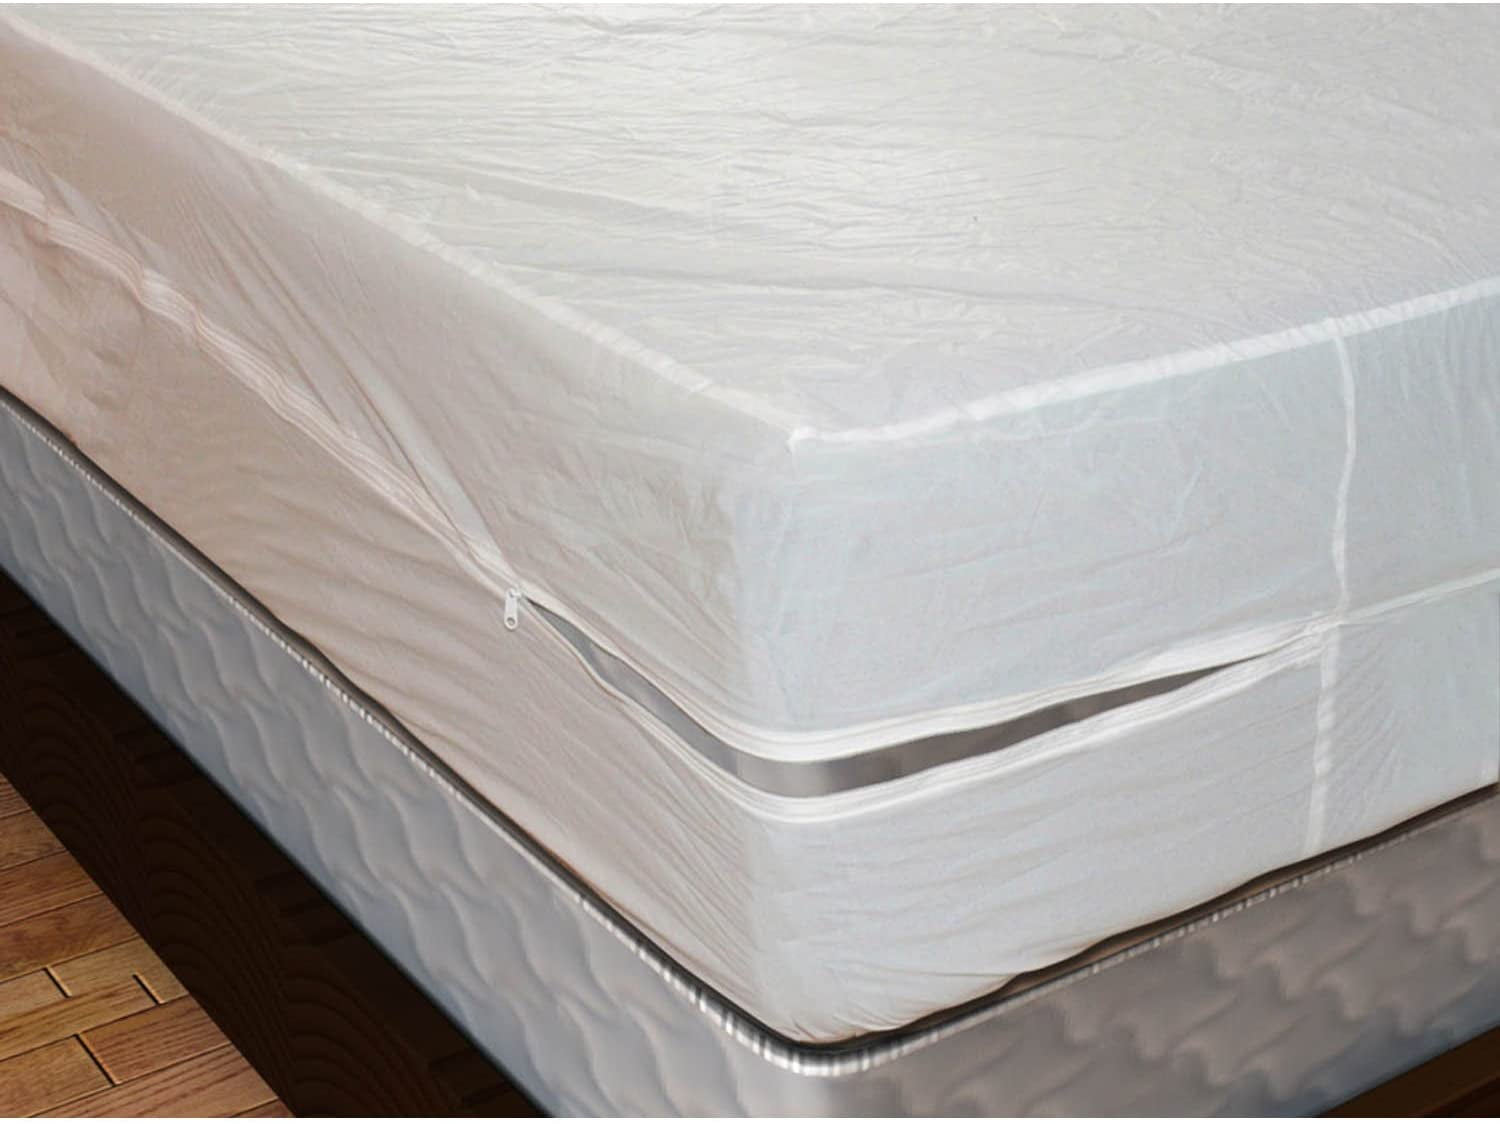 target threshold mattress cover